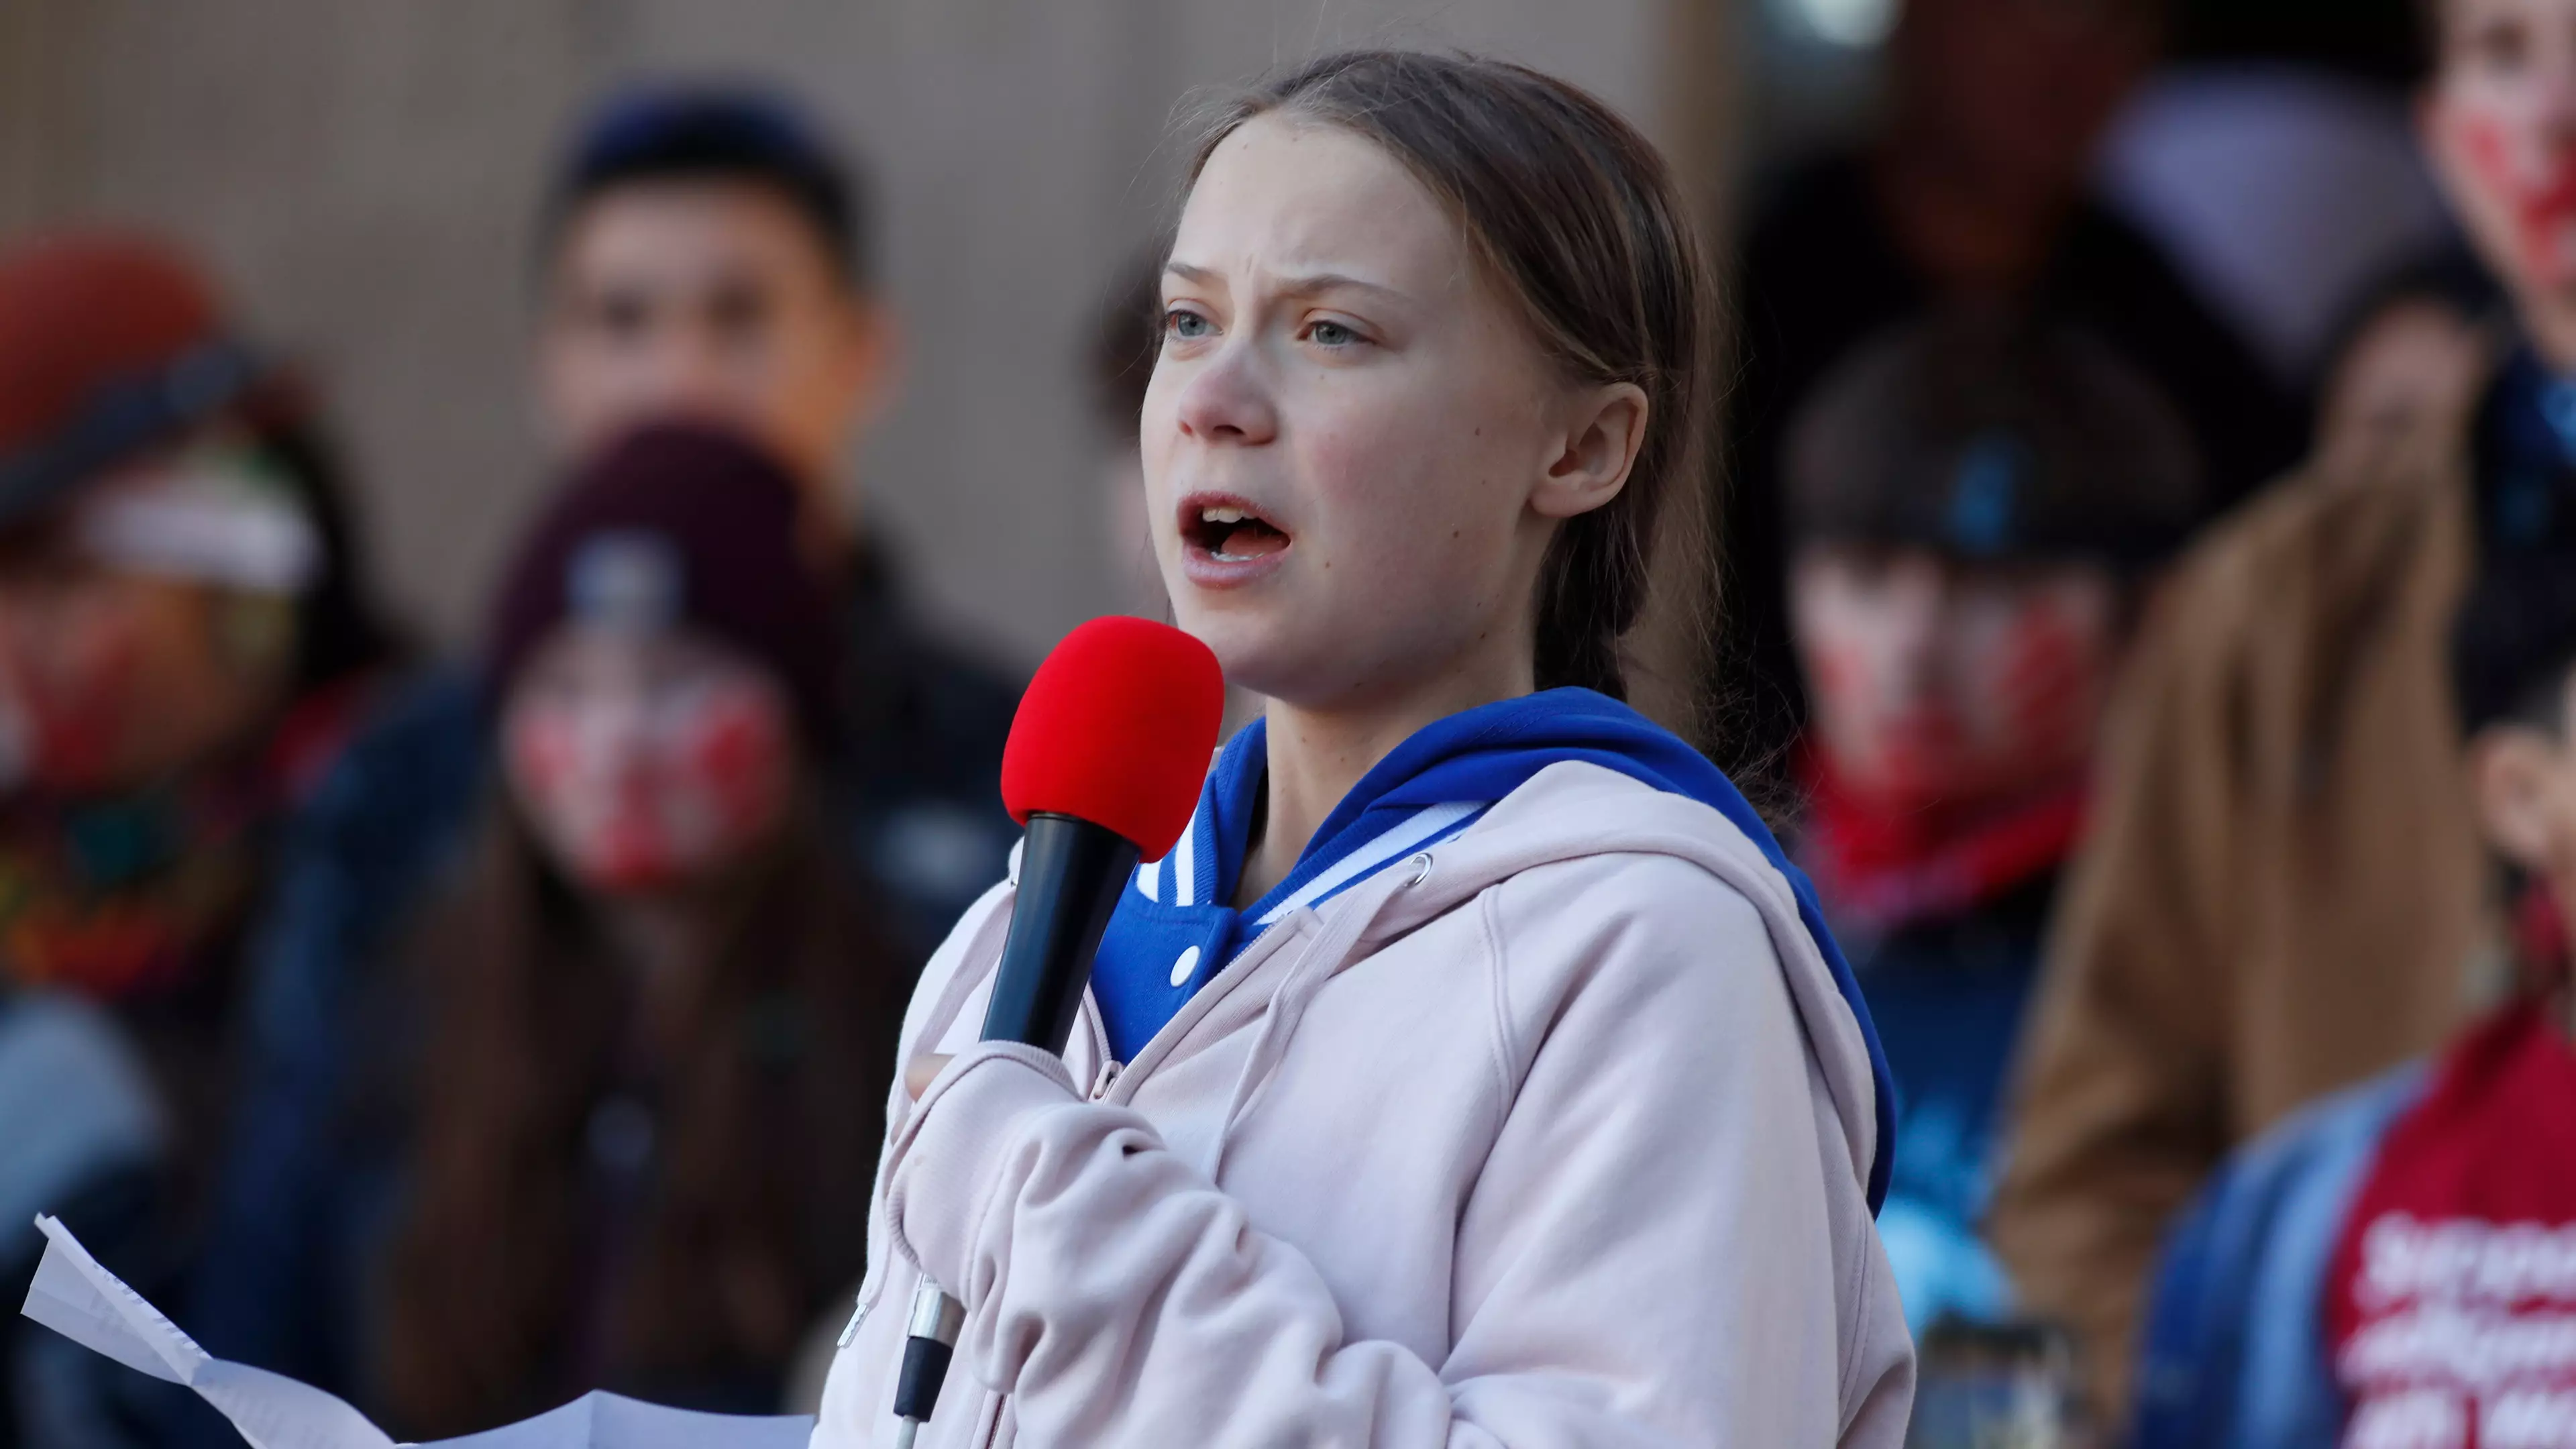 Sir David Attenborough Defends Greta Thunberg And Praises Her Passion